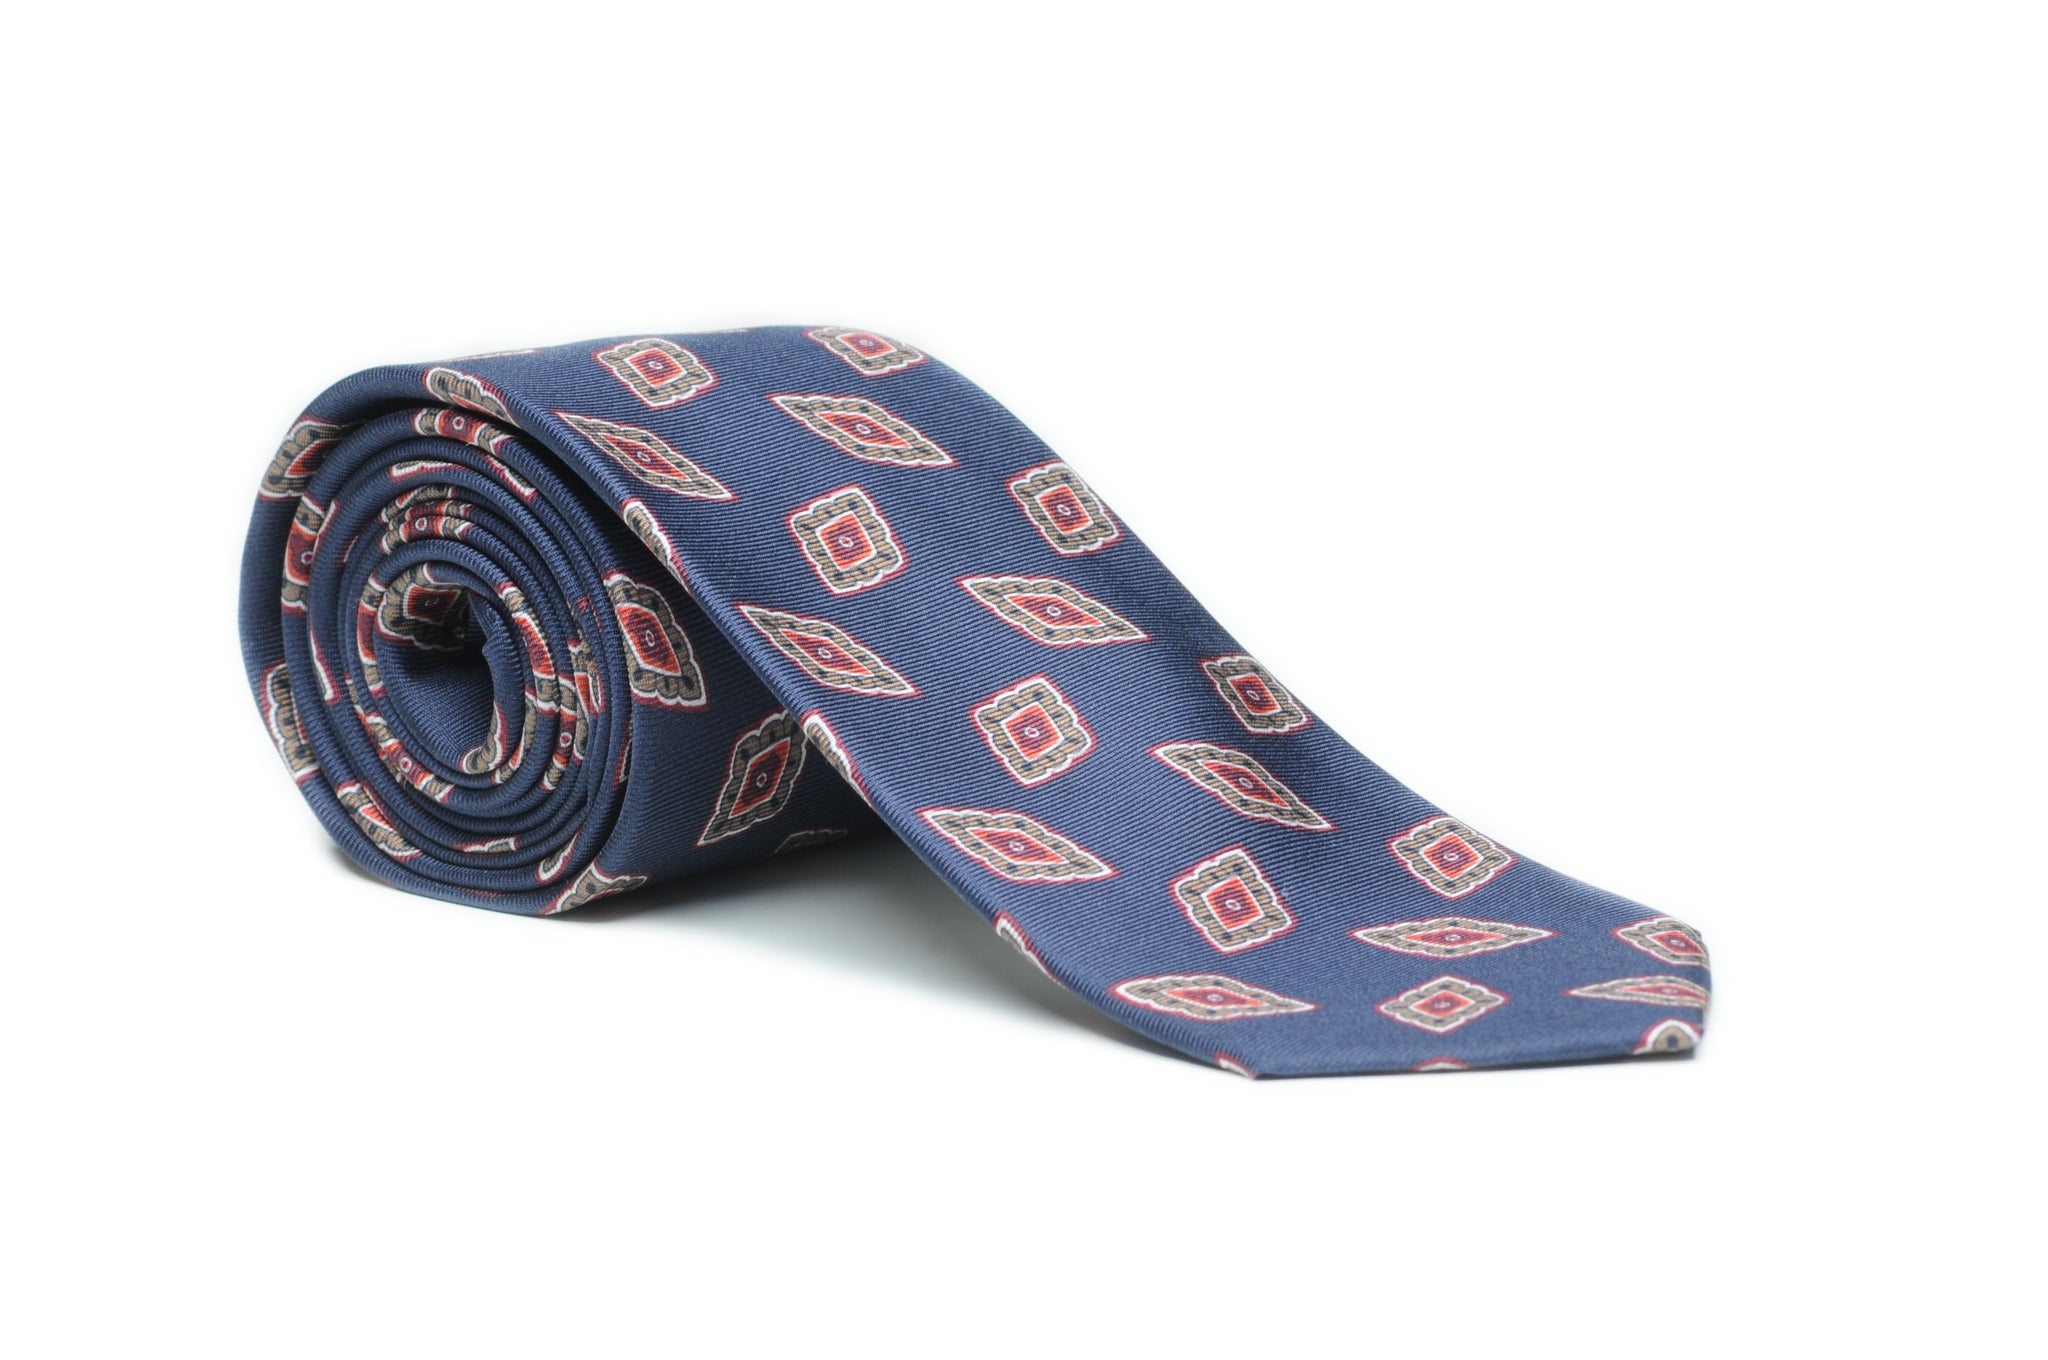 Cravatta stampata medaglione rombo